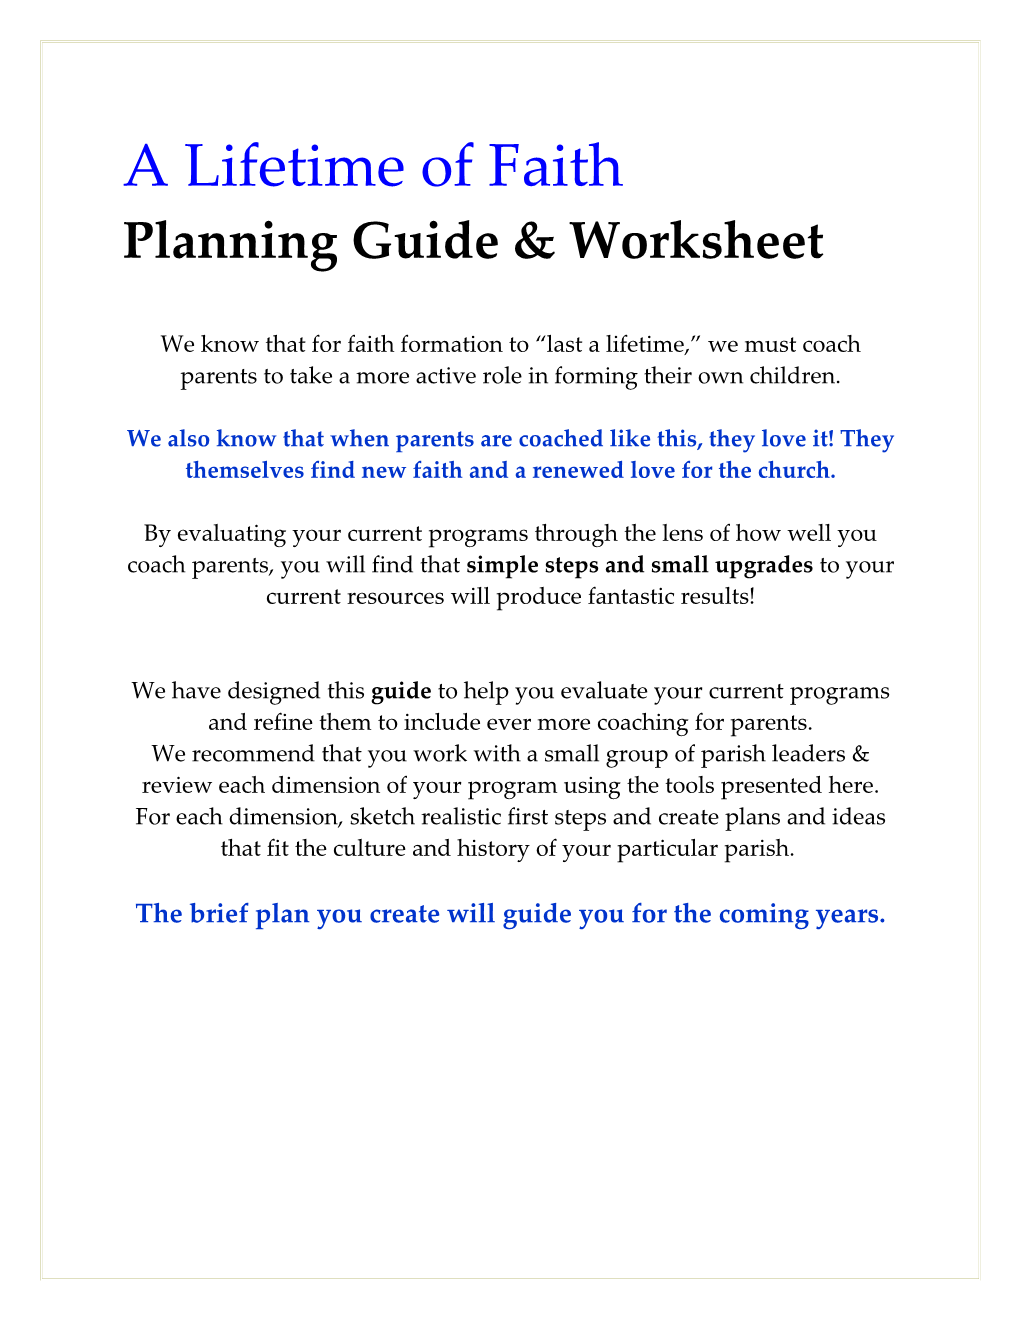 Planning Guide & Worksheet